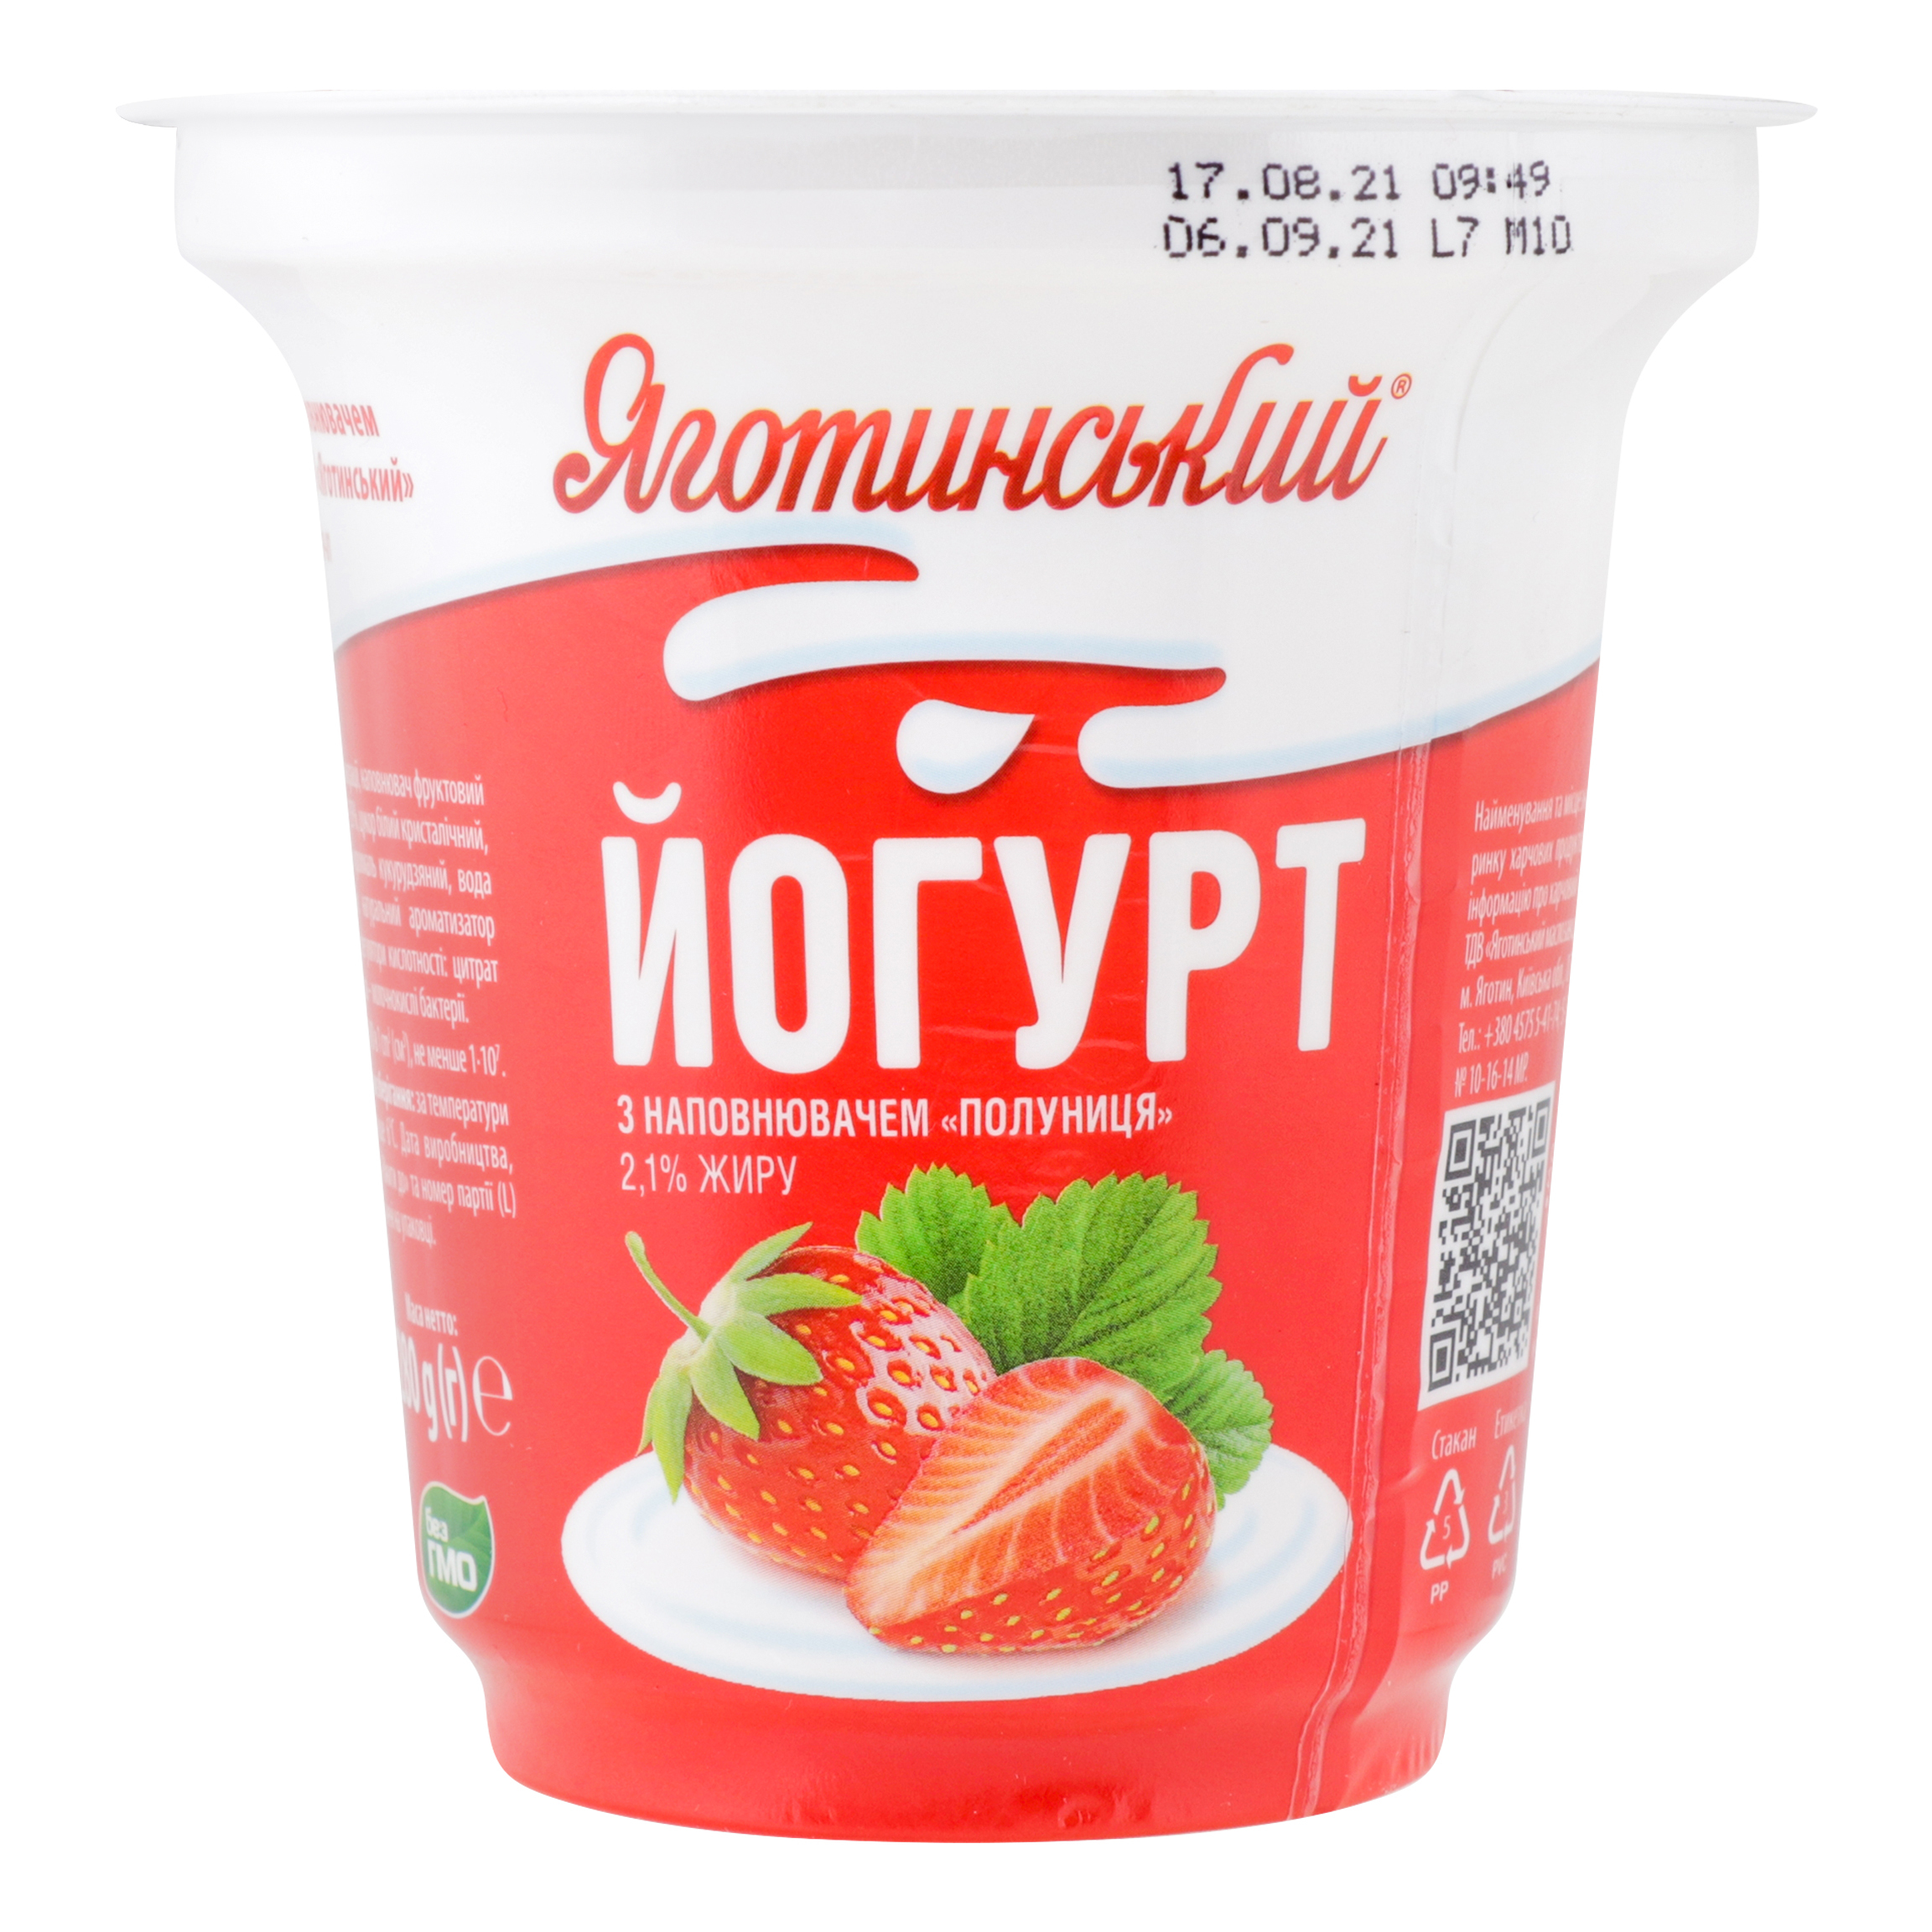 Yogurt Yahotynskyi with strawberries filler 2,1% cup 280g